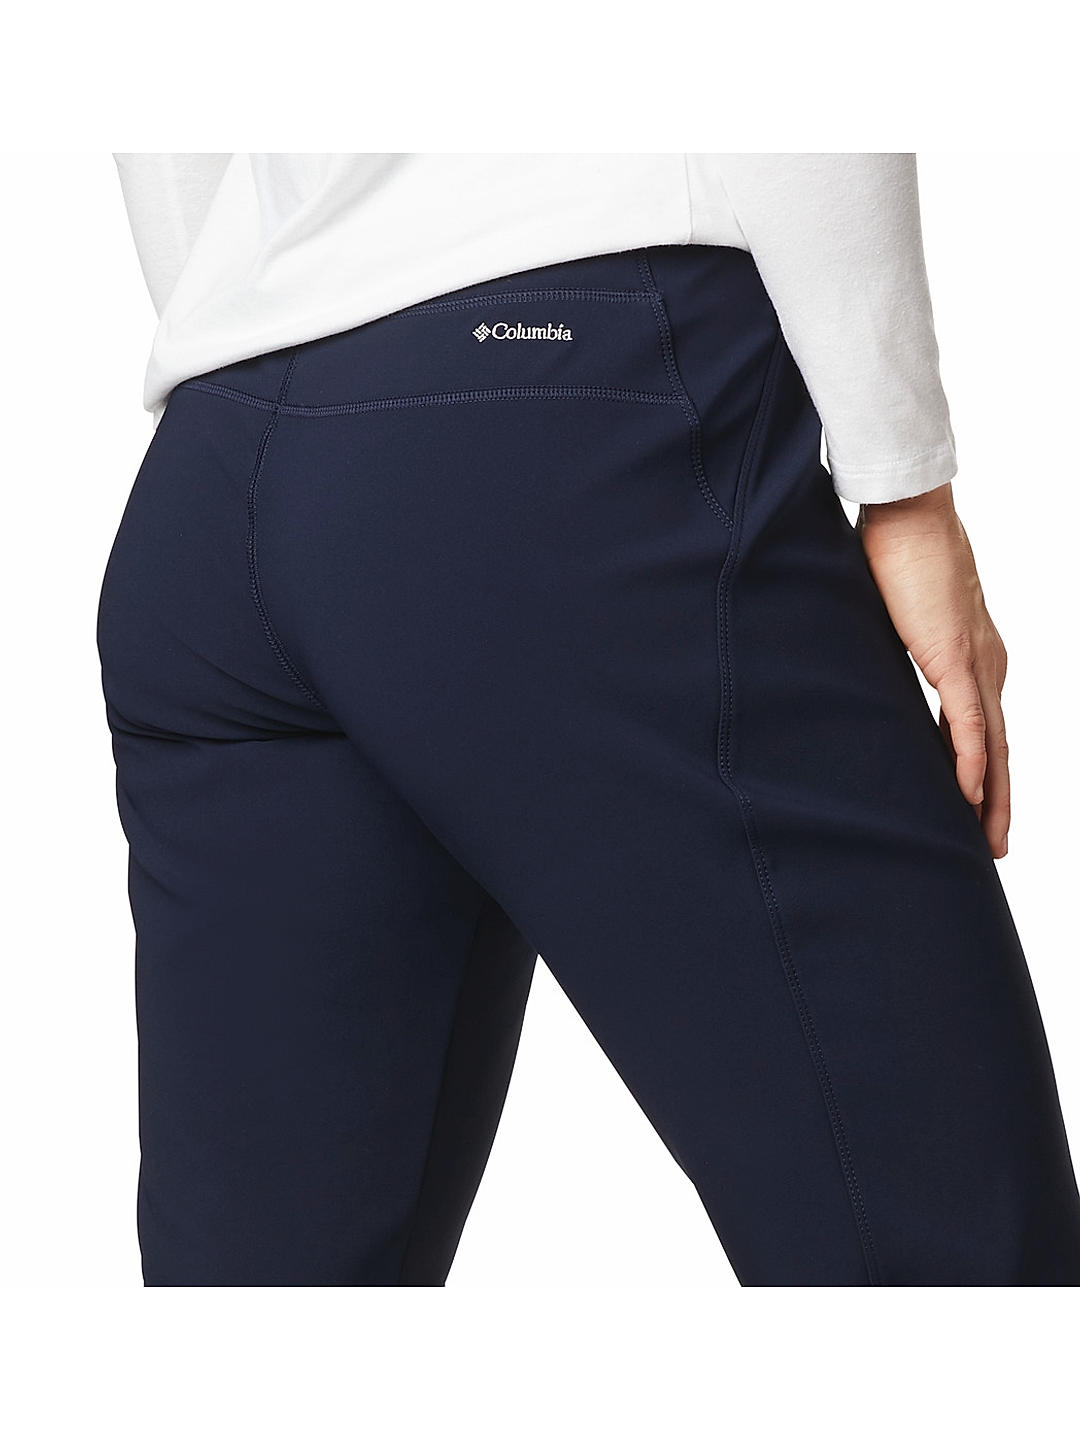 Buy Blue Claudia Ridge Pant for Women Online at Columbia Sportswear  488112